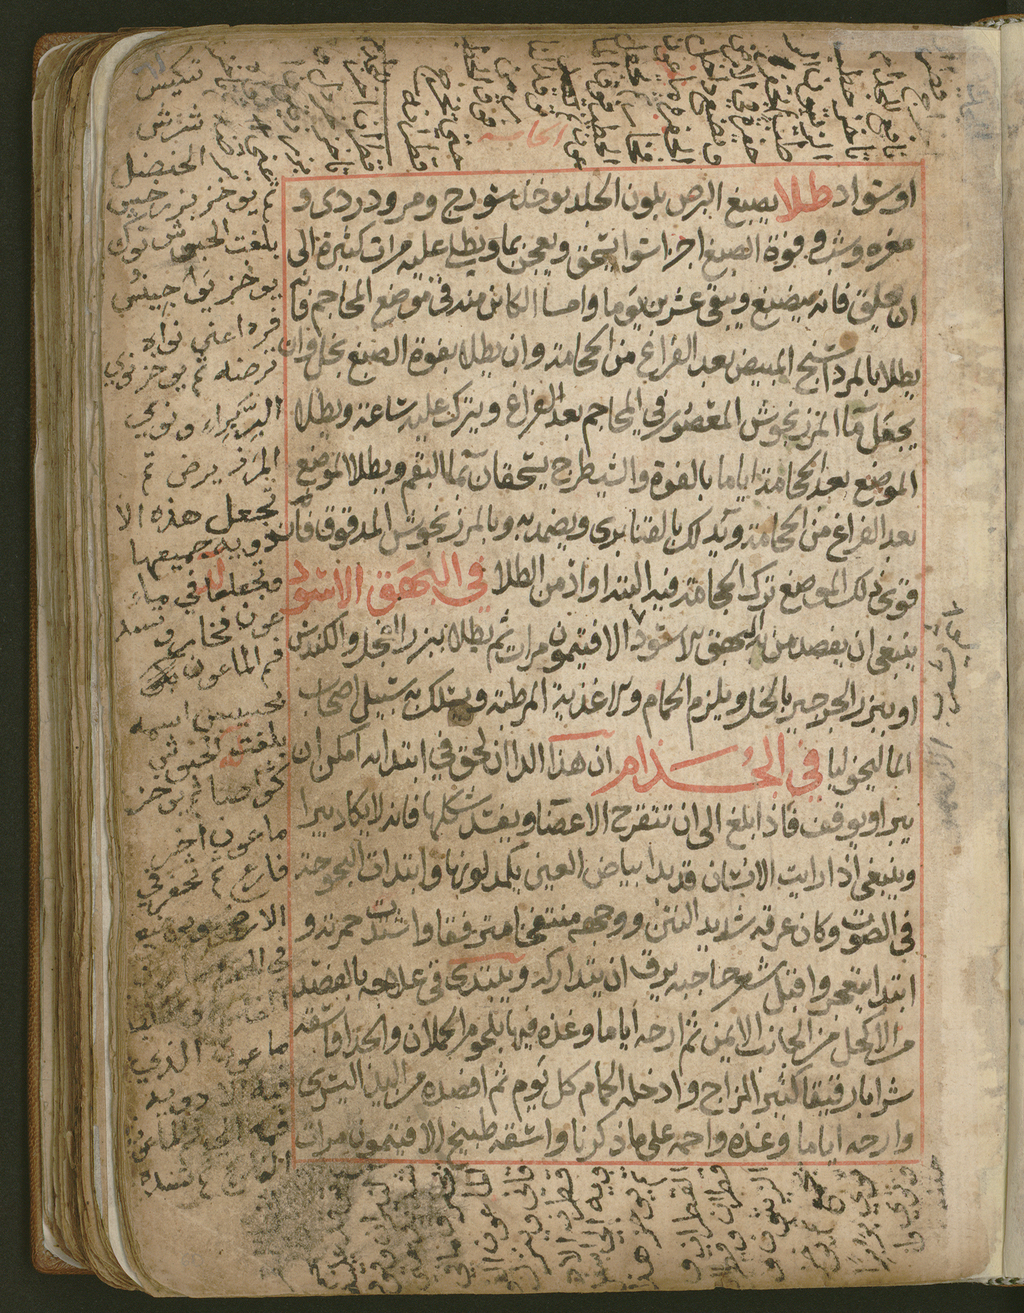  Rāzī's discussion of leprosy in his Kitāb al-Manṣūrī, Ms Library of congress Arabic manuscripts, SM-55 fol.61r 